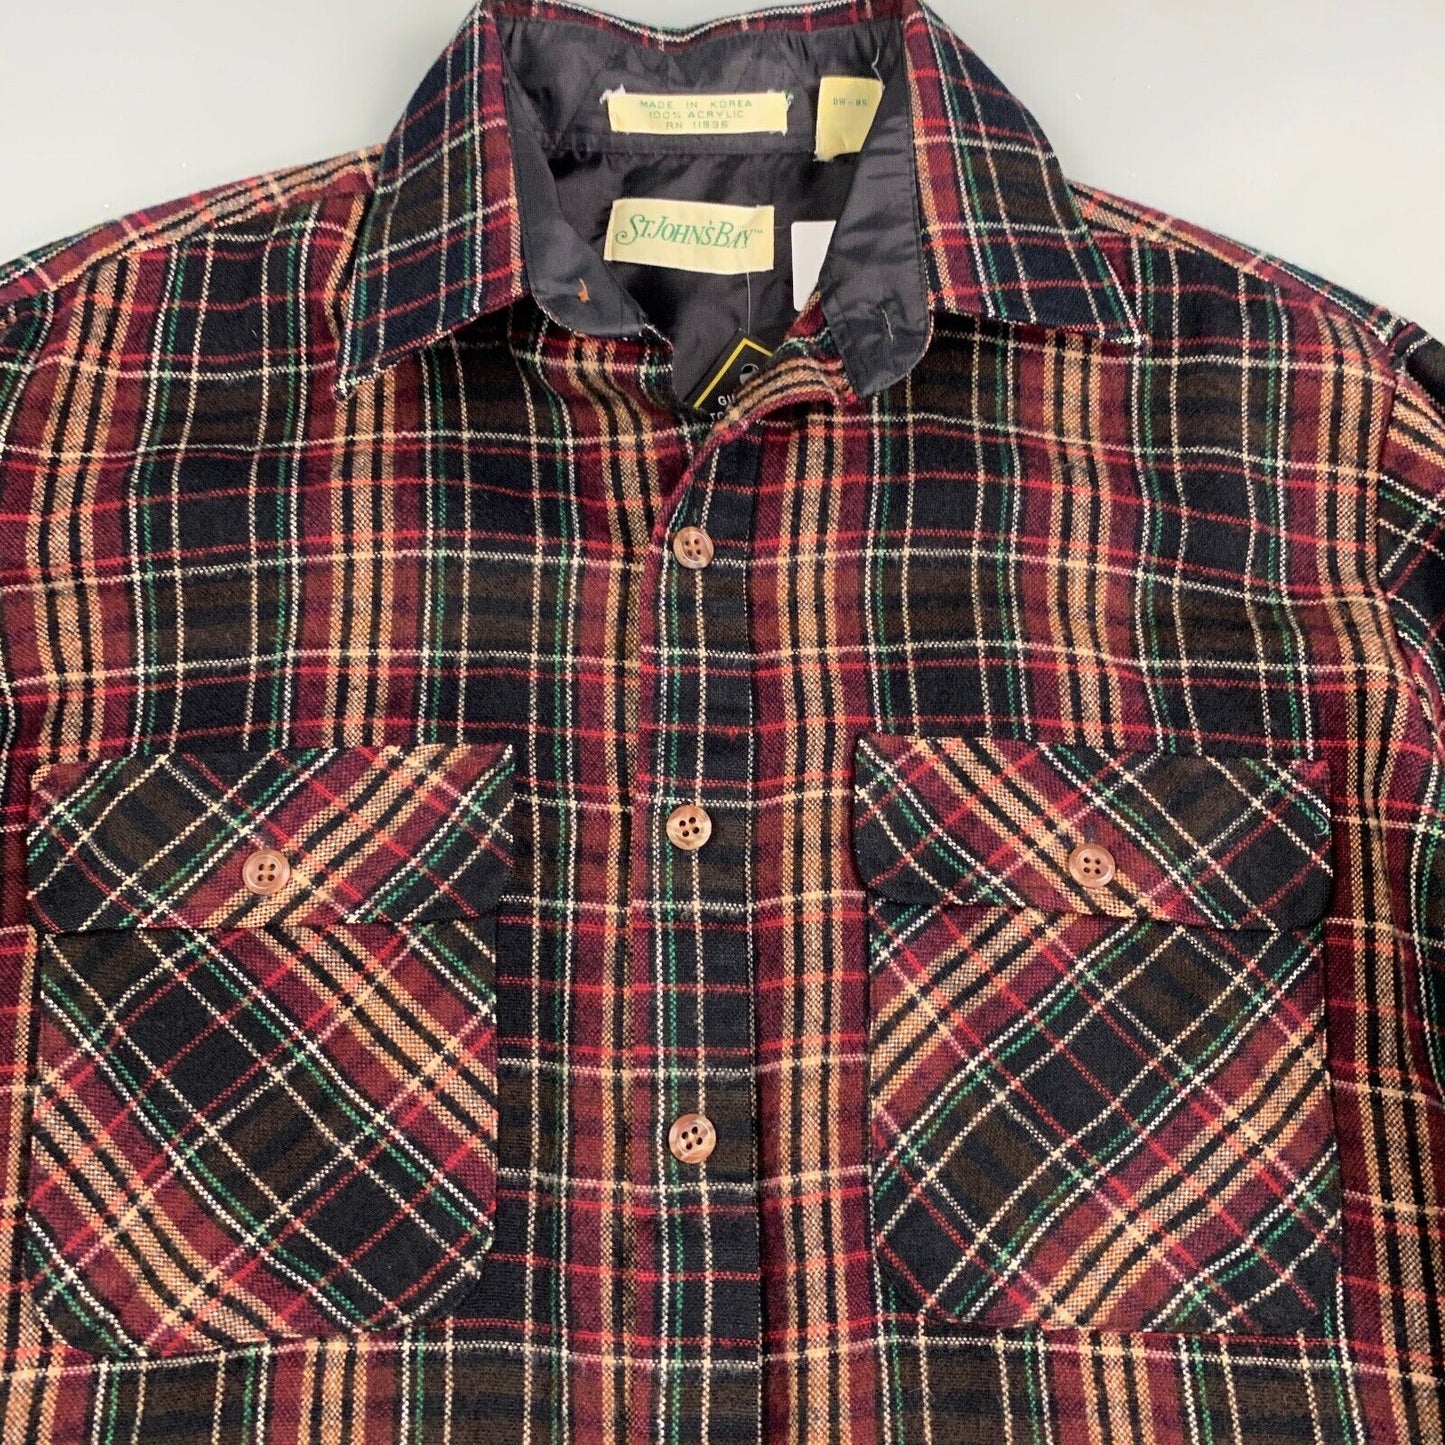 VINTAGE 90s St Johns Bay Plaid Flannel Lined Button Up Shirt sz Medium Adult